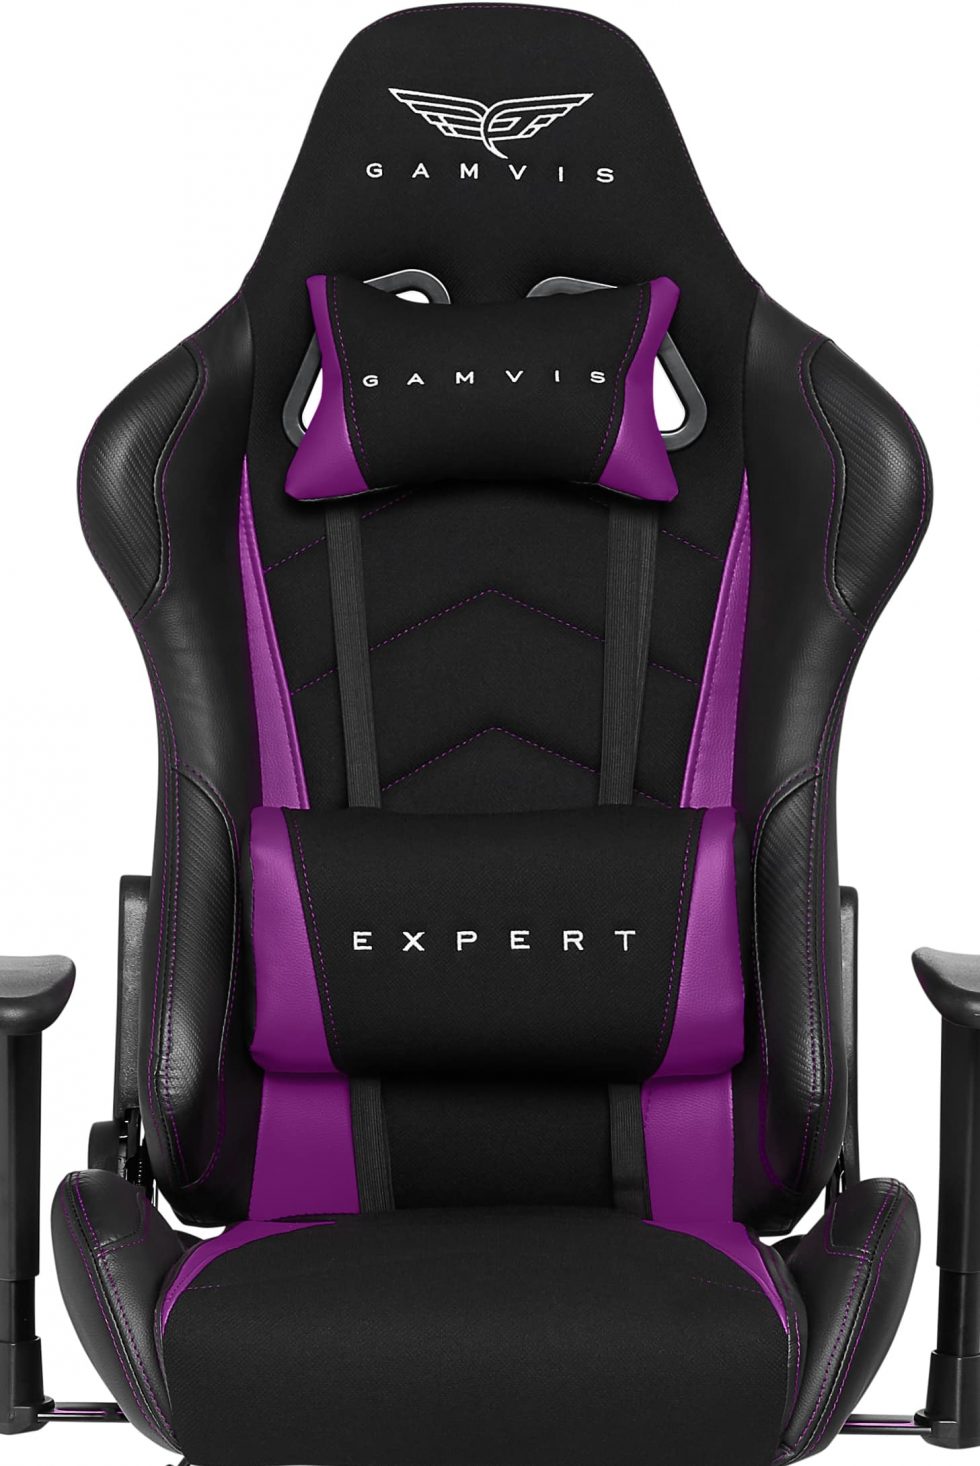 Gamvis EXPERT Fabric Gaming Chair - Black/Plum Purple